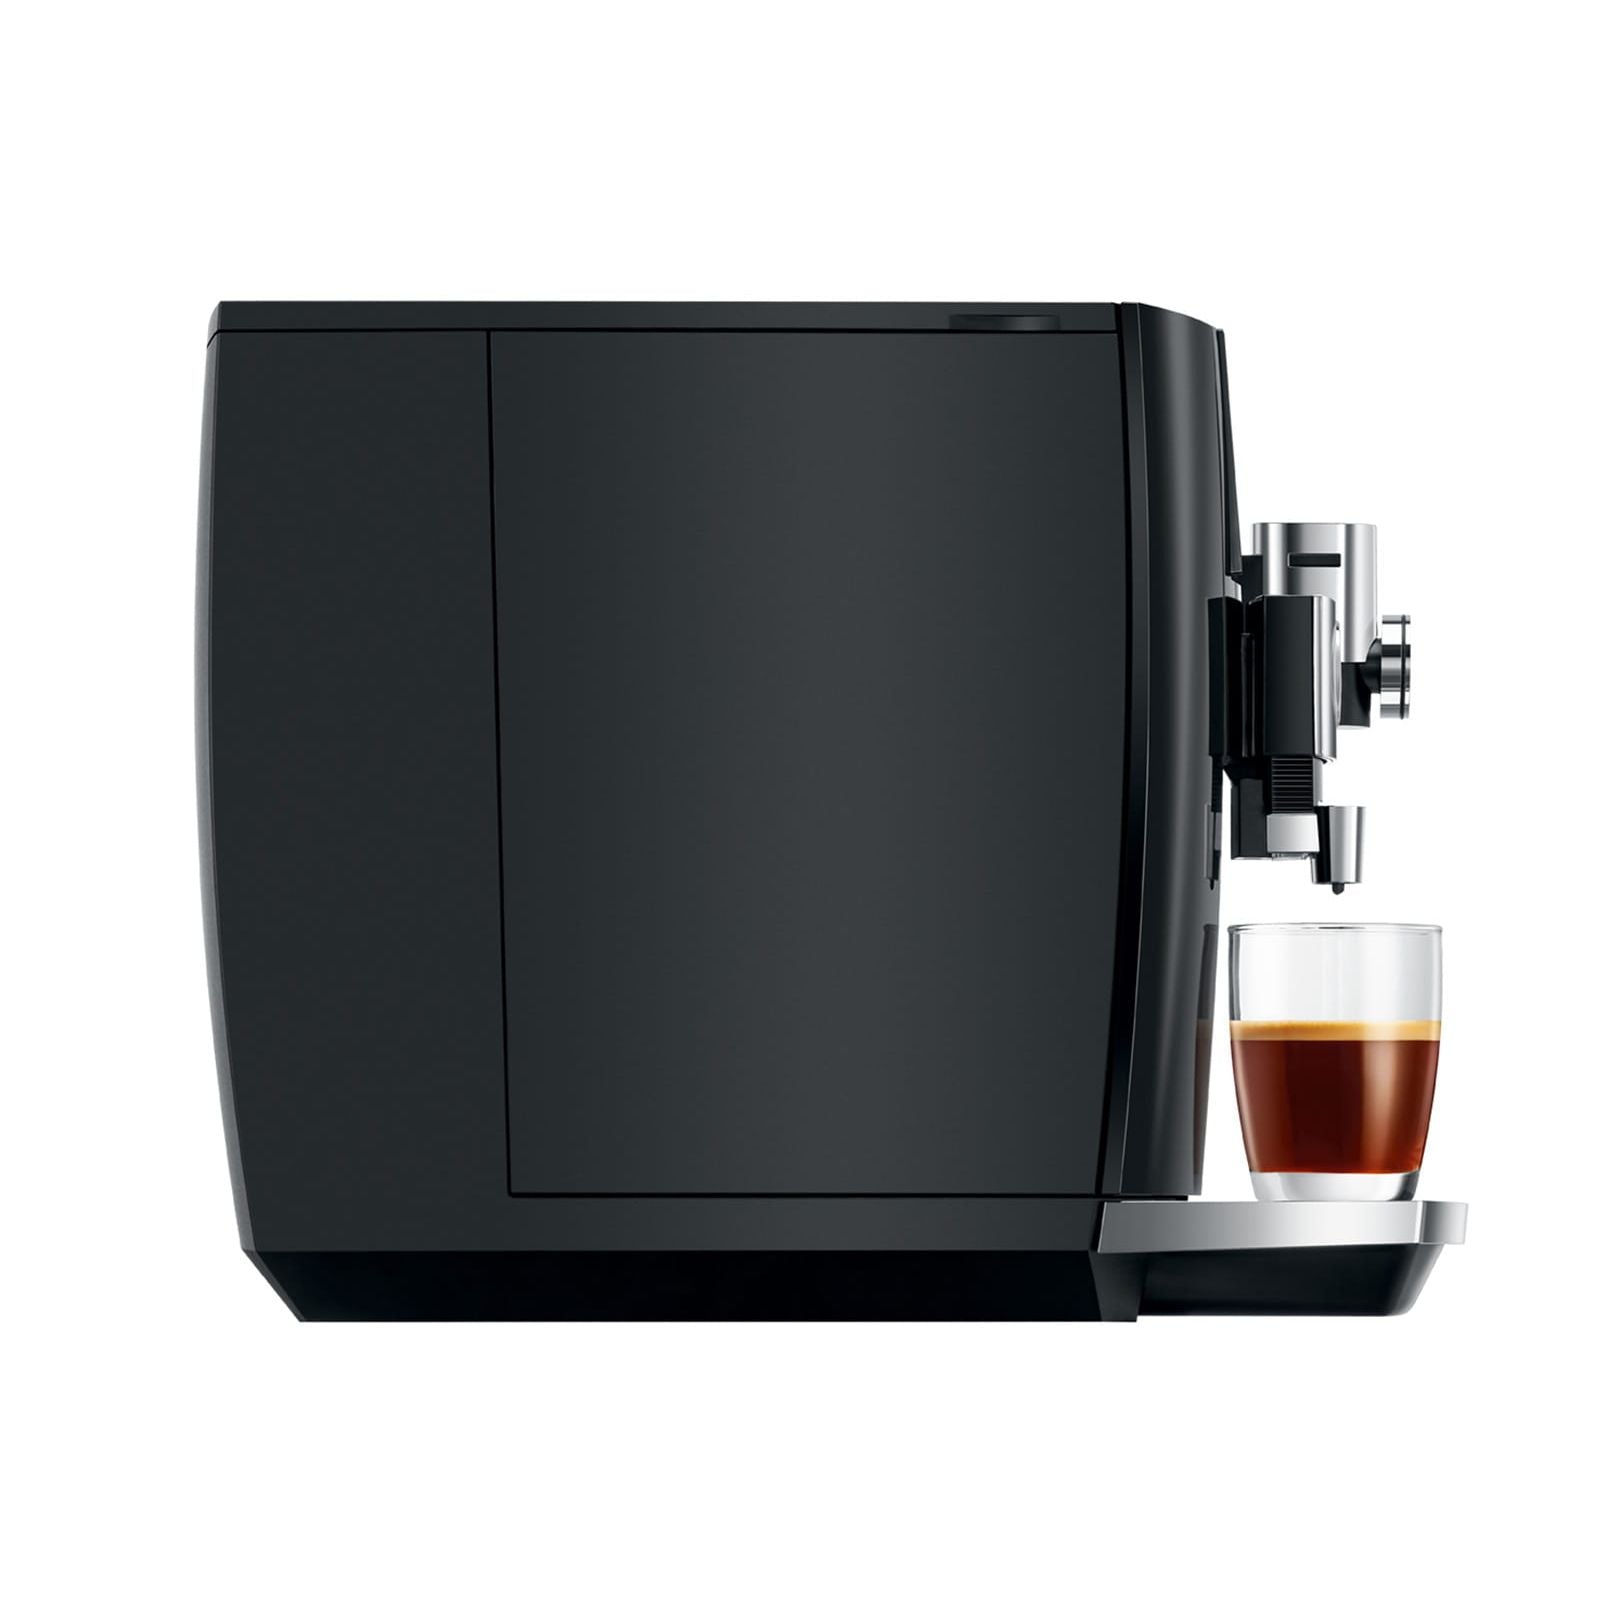 Jura J8 Piano Black Espresso Machine #15557